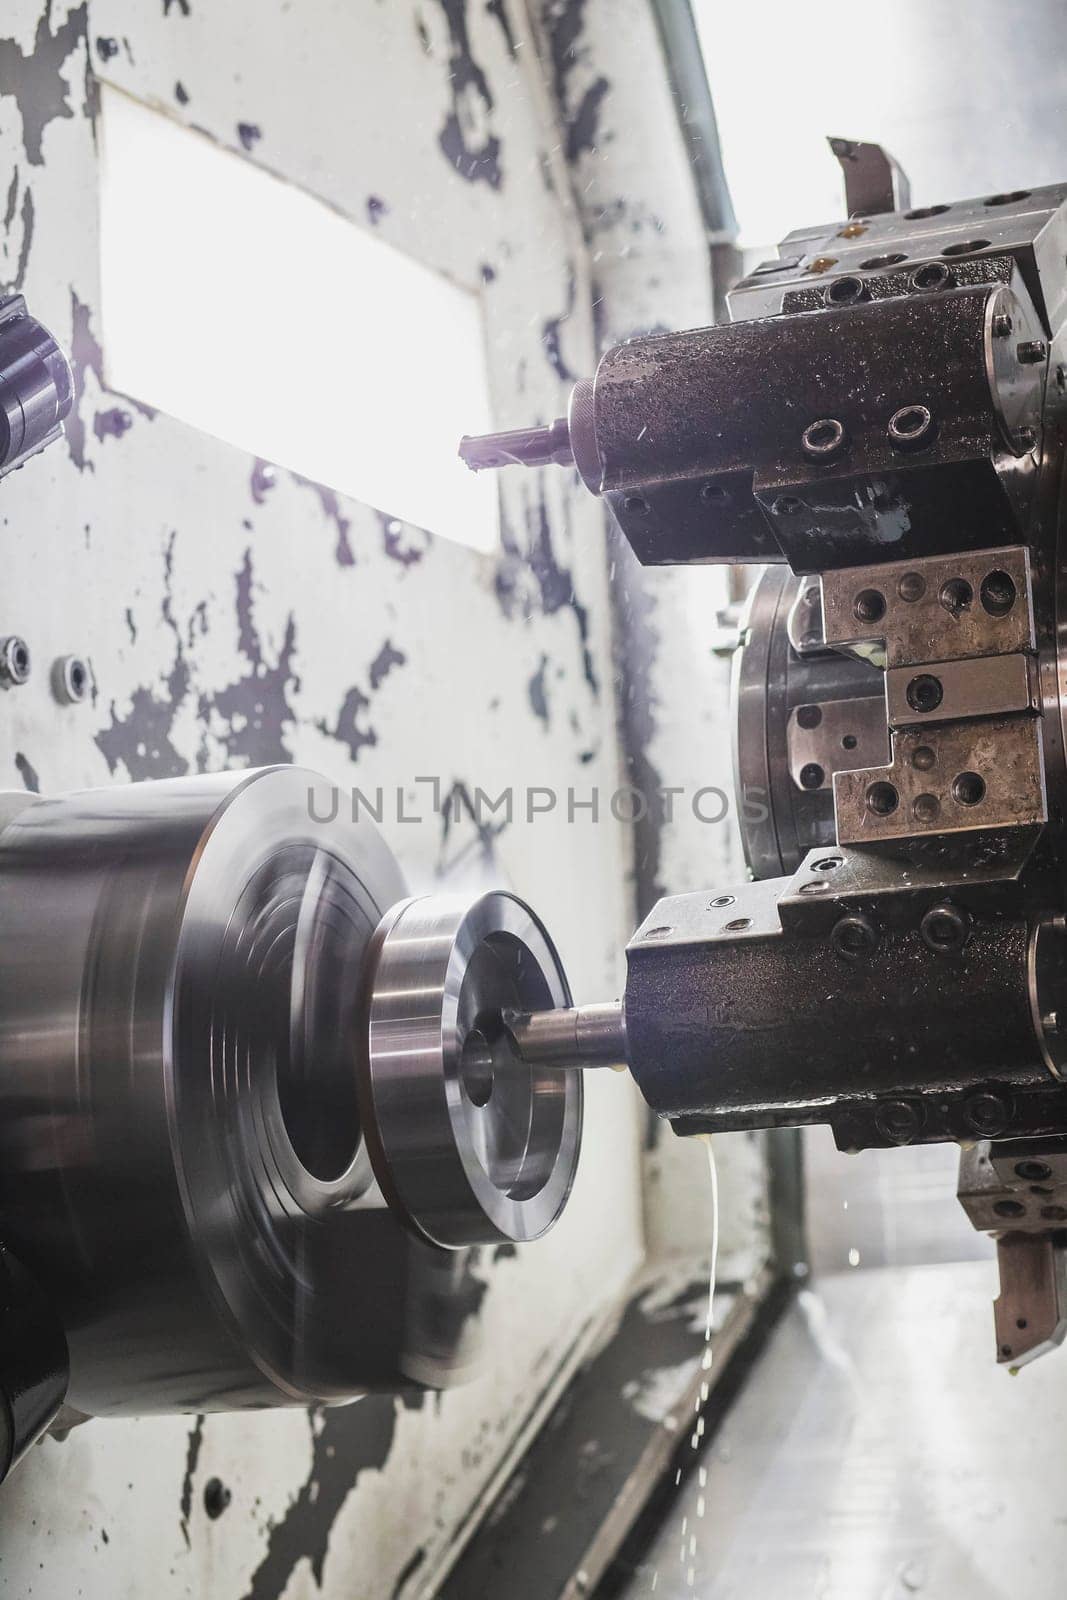 A milling cutter in a CNC machine cuts a metal workpiece that rotates at high speed.